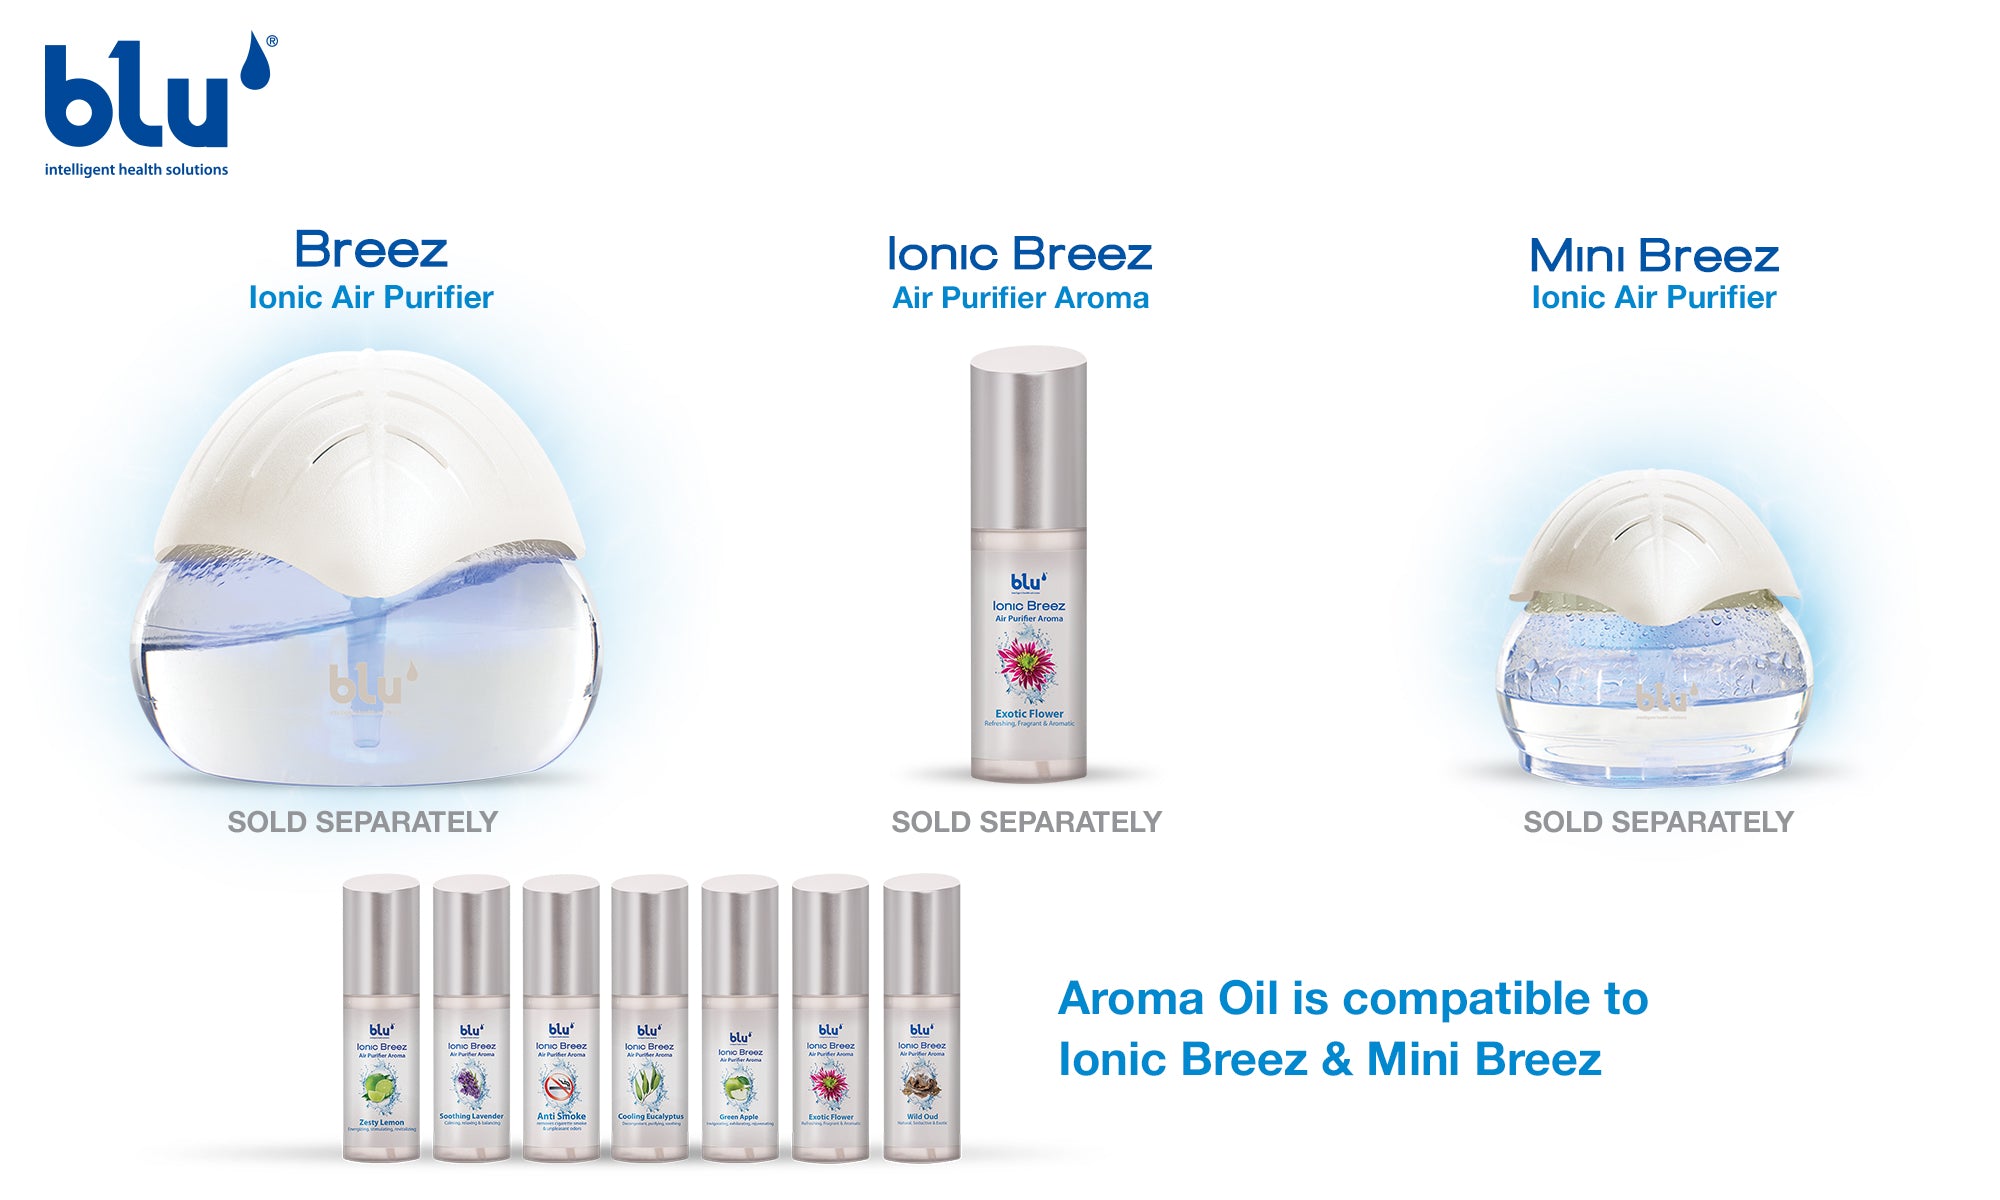 Blu Breez Ionic Breez Air Purifier Aroma Oil - 100ml